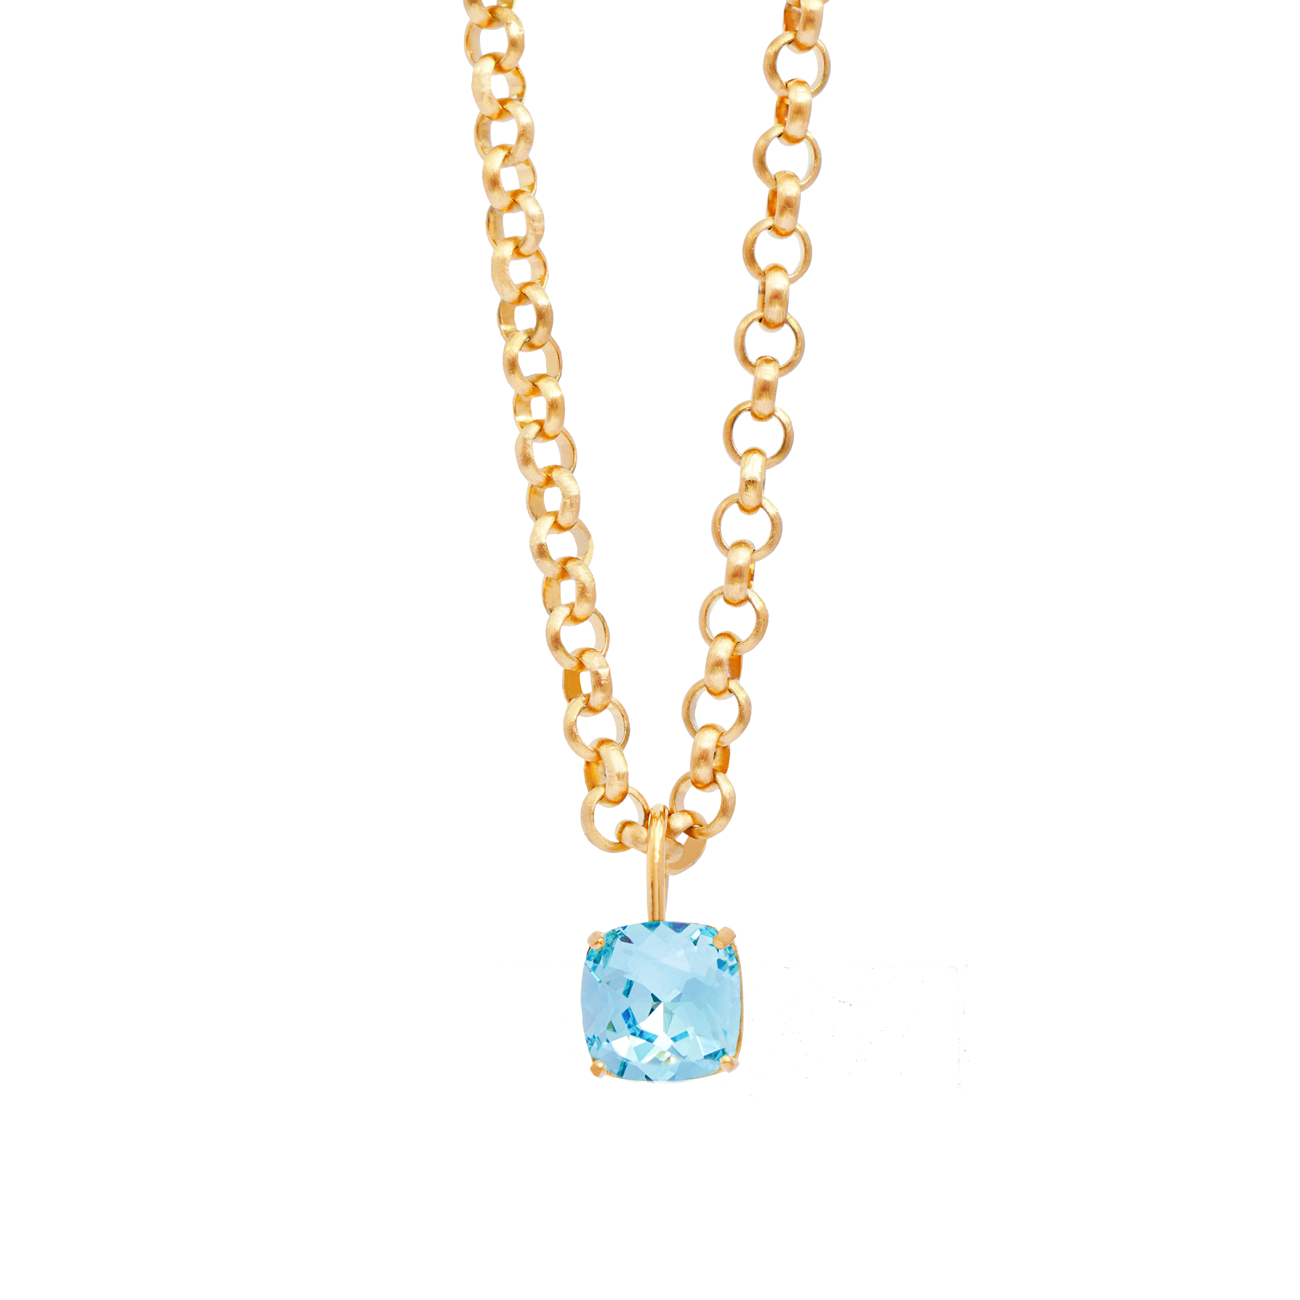 Carla Crystal chain necklace - Ocean blue